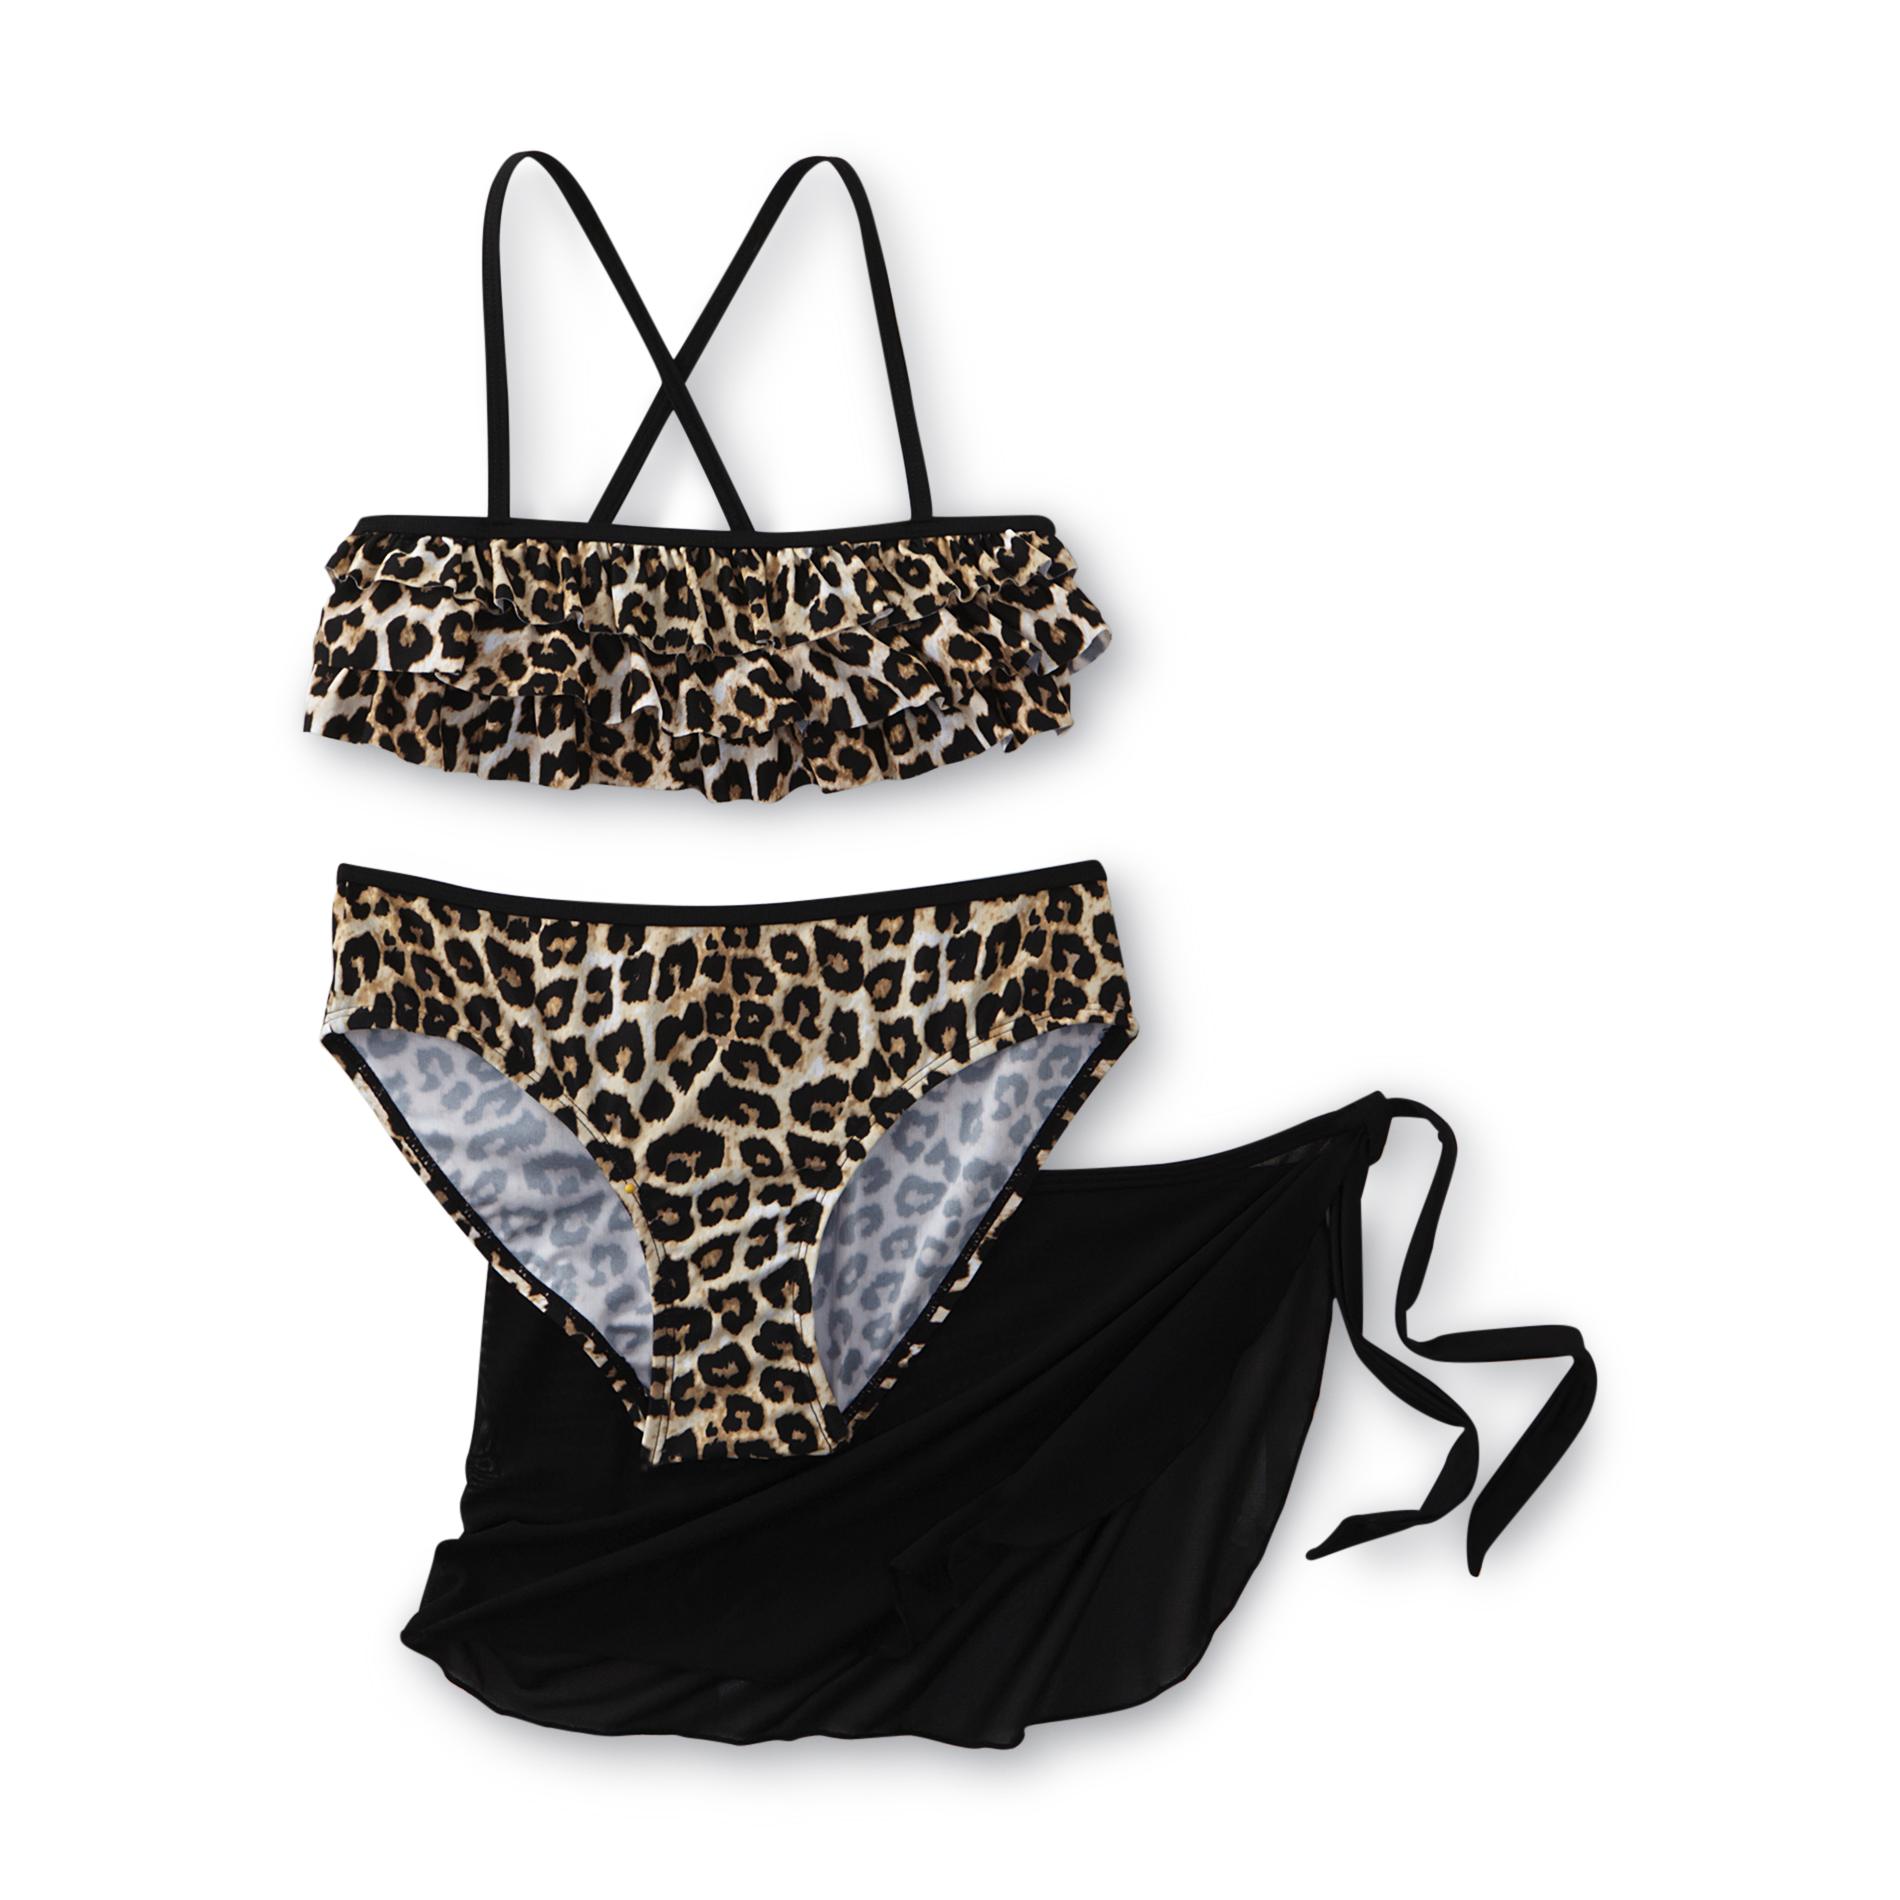 Girl's Bandeau Bikini Top, Bottoms & Cover-Up - Leopard Print